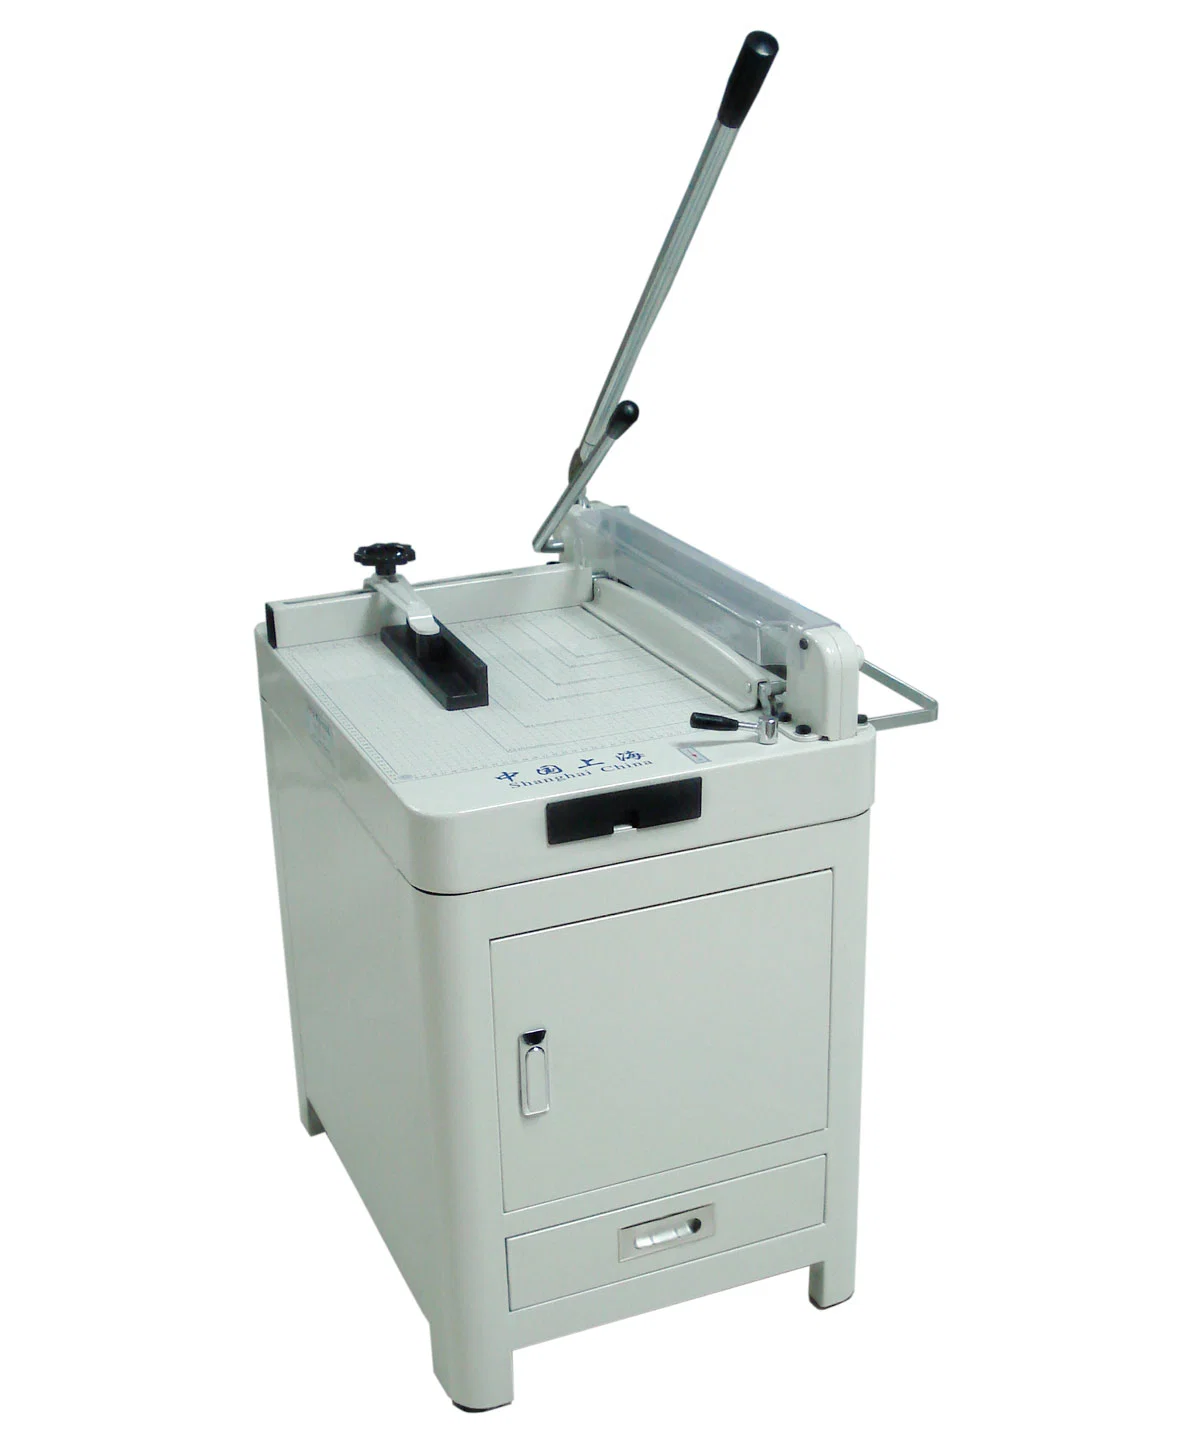 Manual de guillotina Cortador de papel WD-868A3 con el gabinete